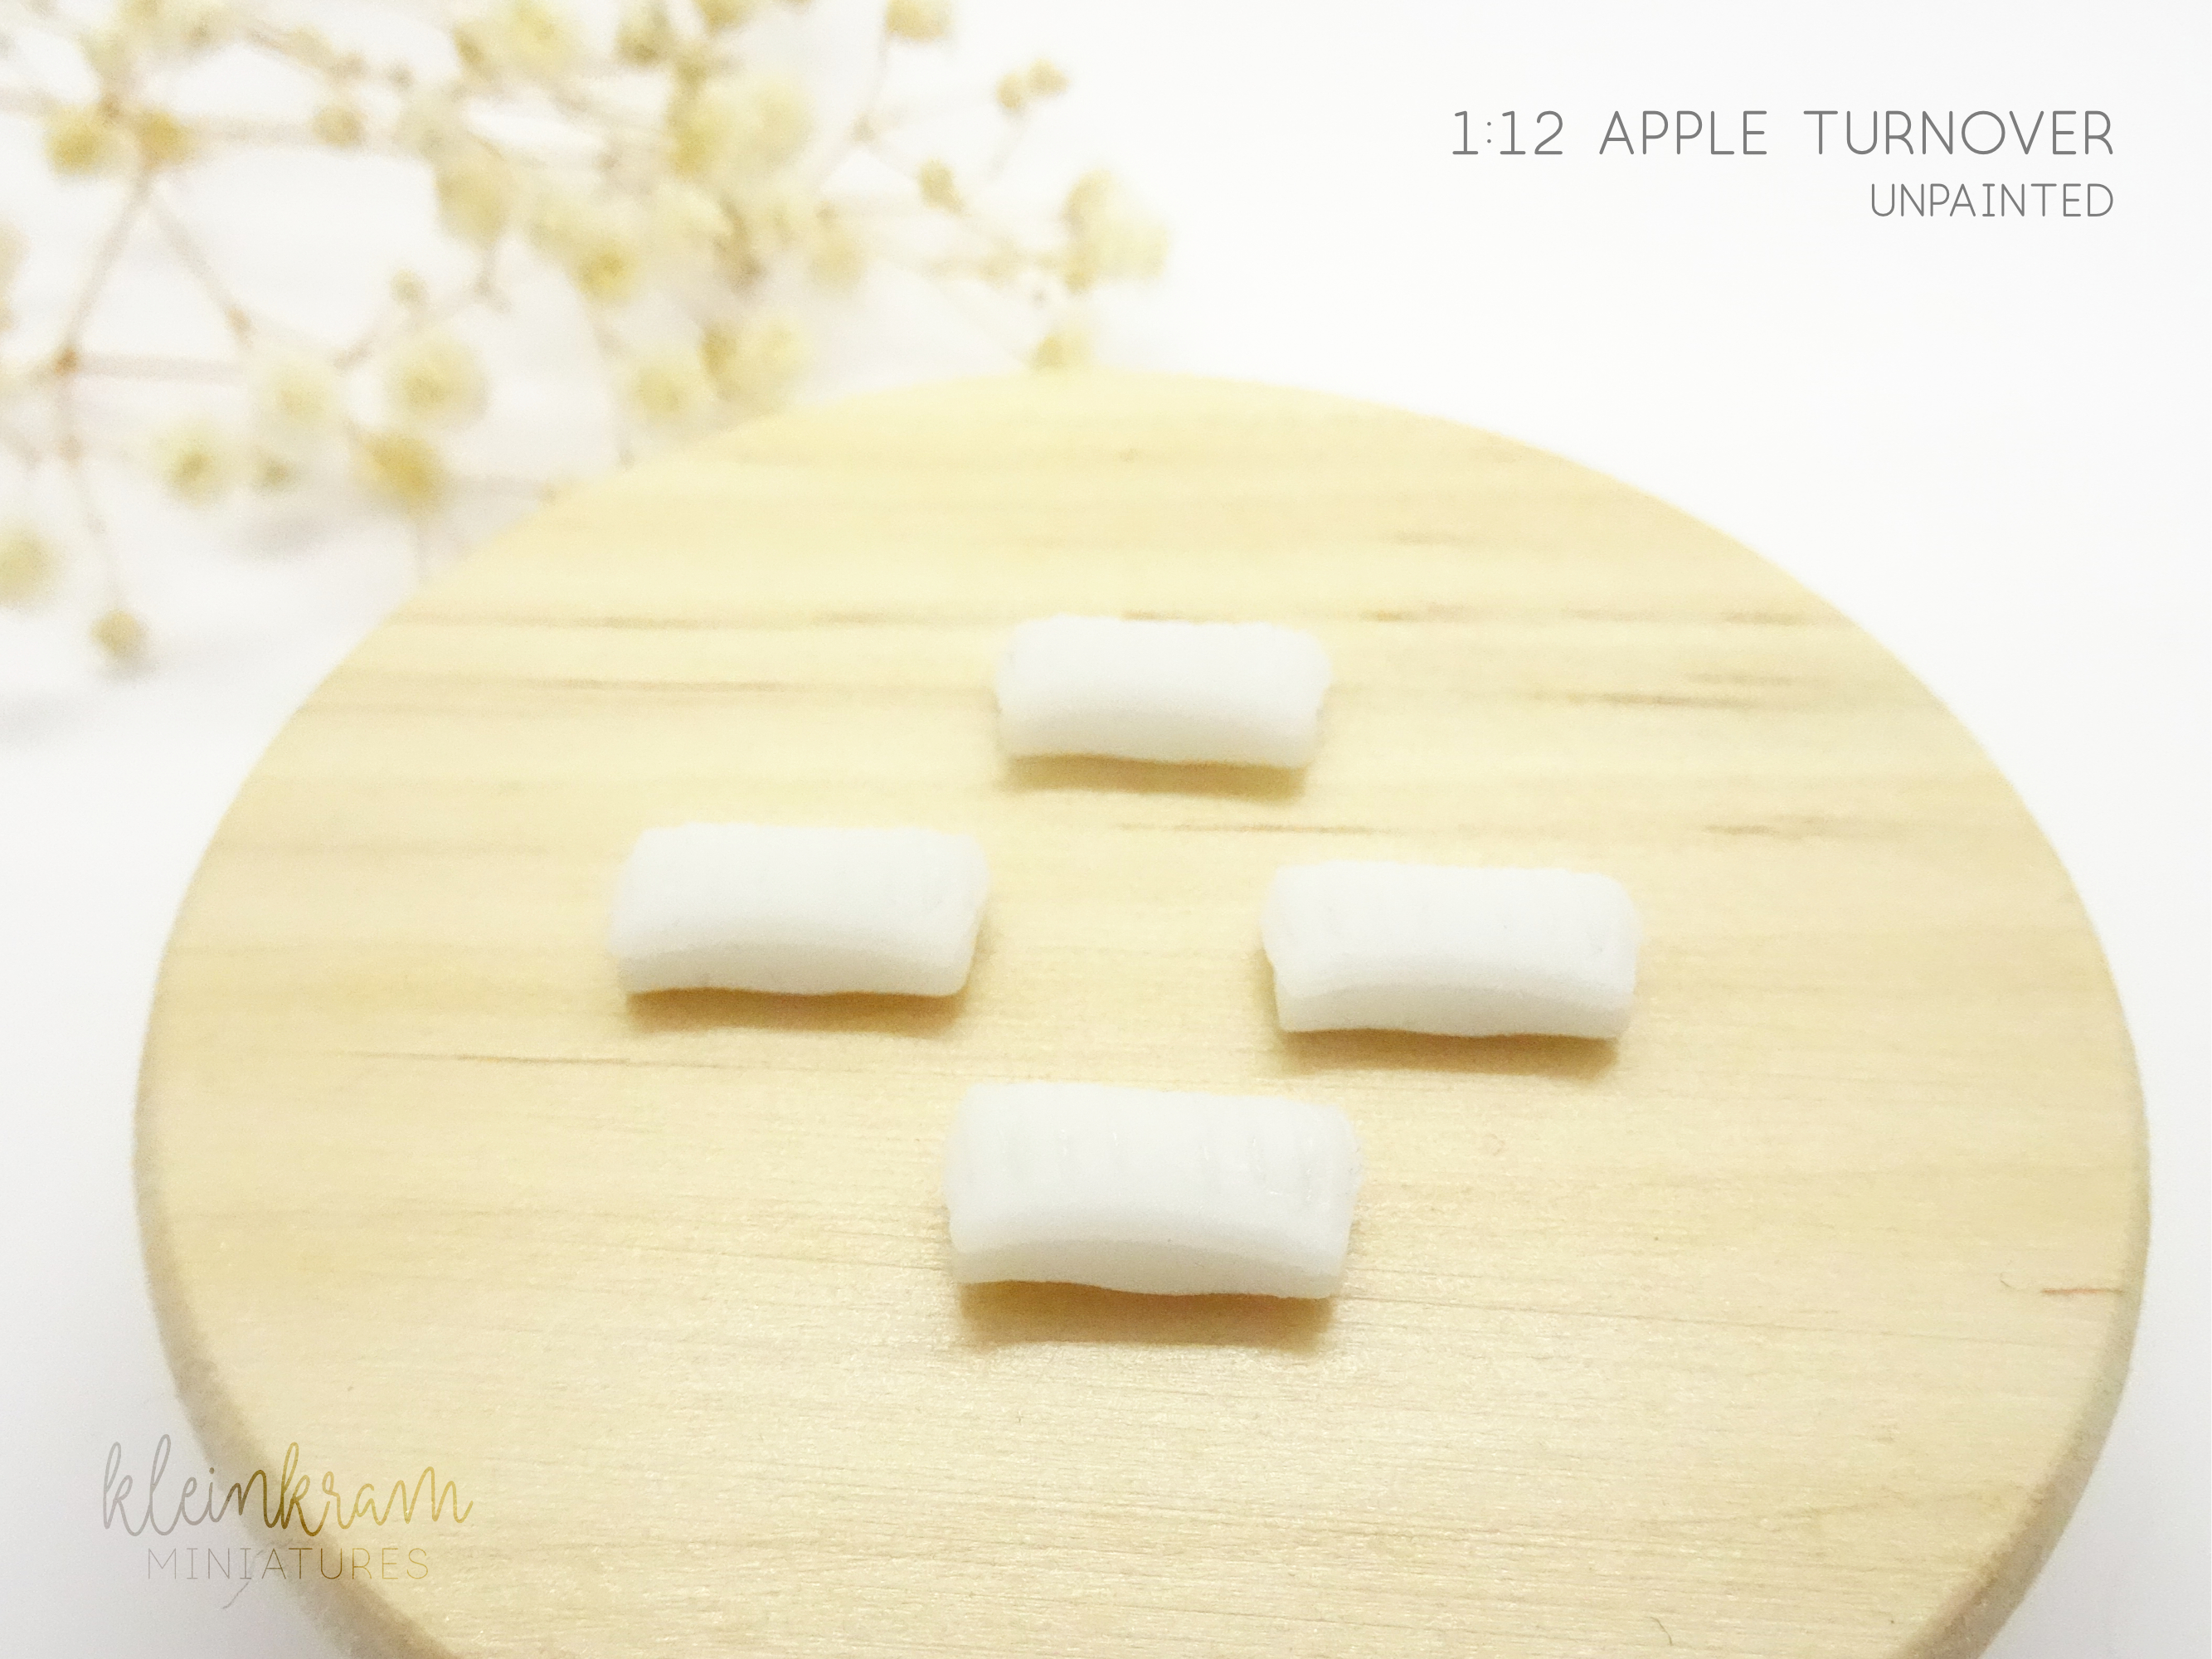 Apple Turnover, Danish Pastry - Set of 4 - 1/12 Miniature